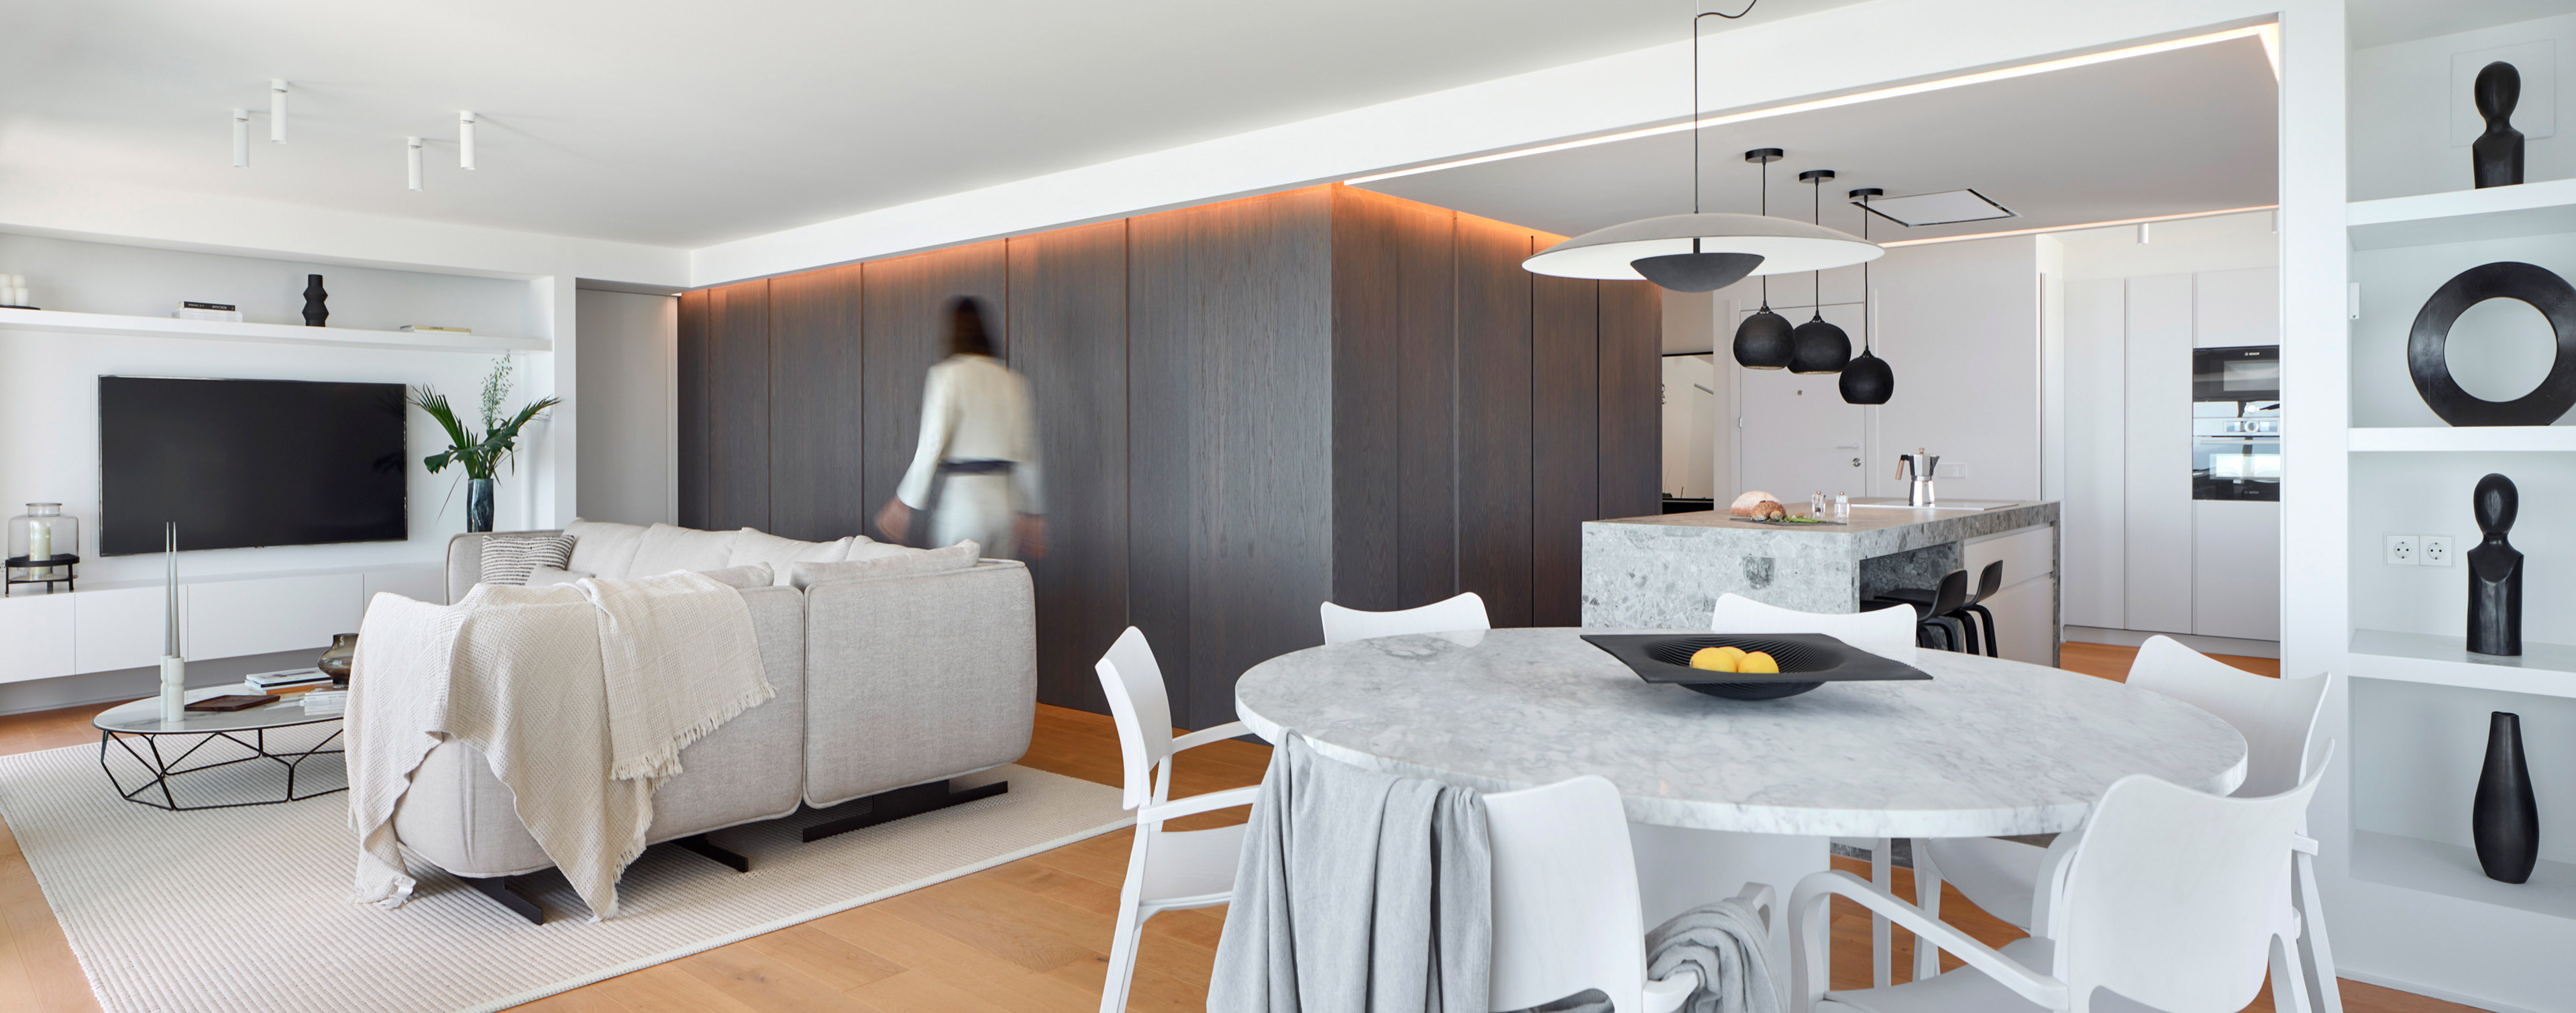 luv studio luxury architects sitges apartment IMG 01 - LUV Studio - Architecture & Design - Barcelona